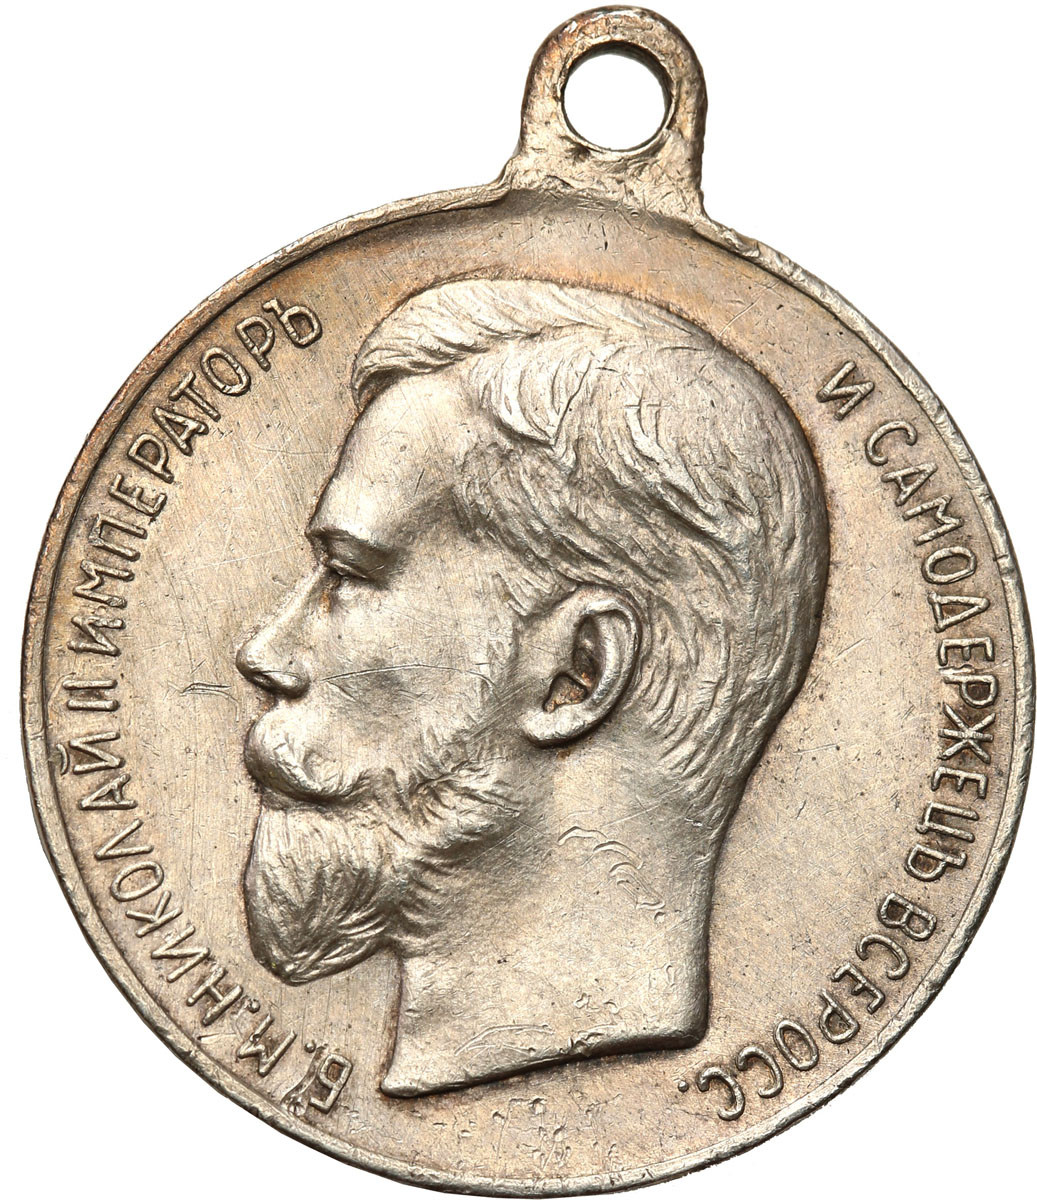 Rosja, Mikołaj II. Medal za gorliwość, srebro